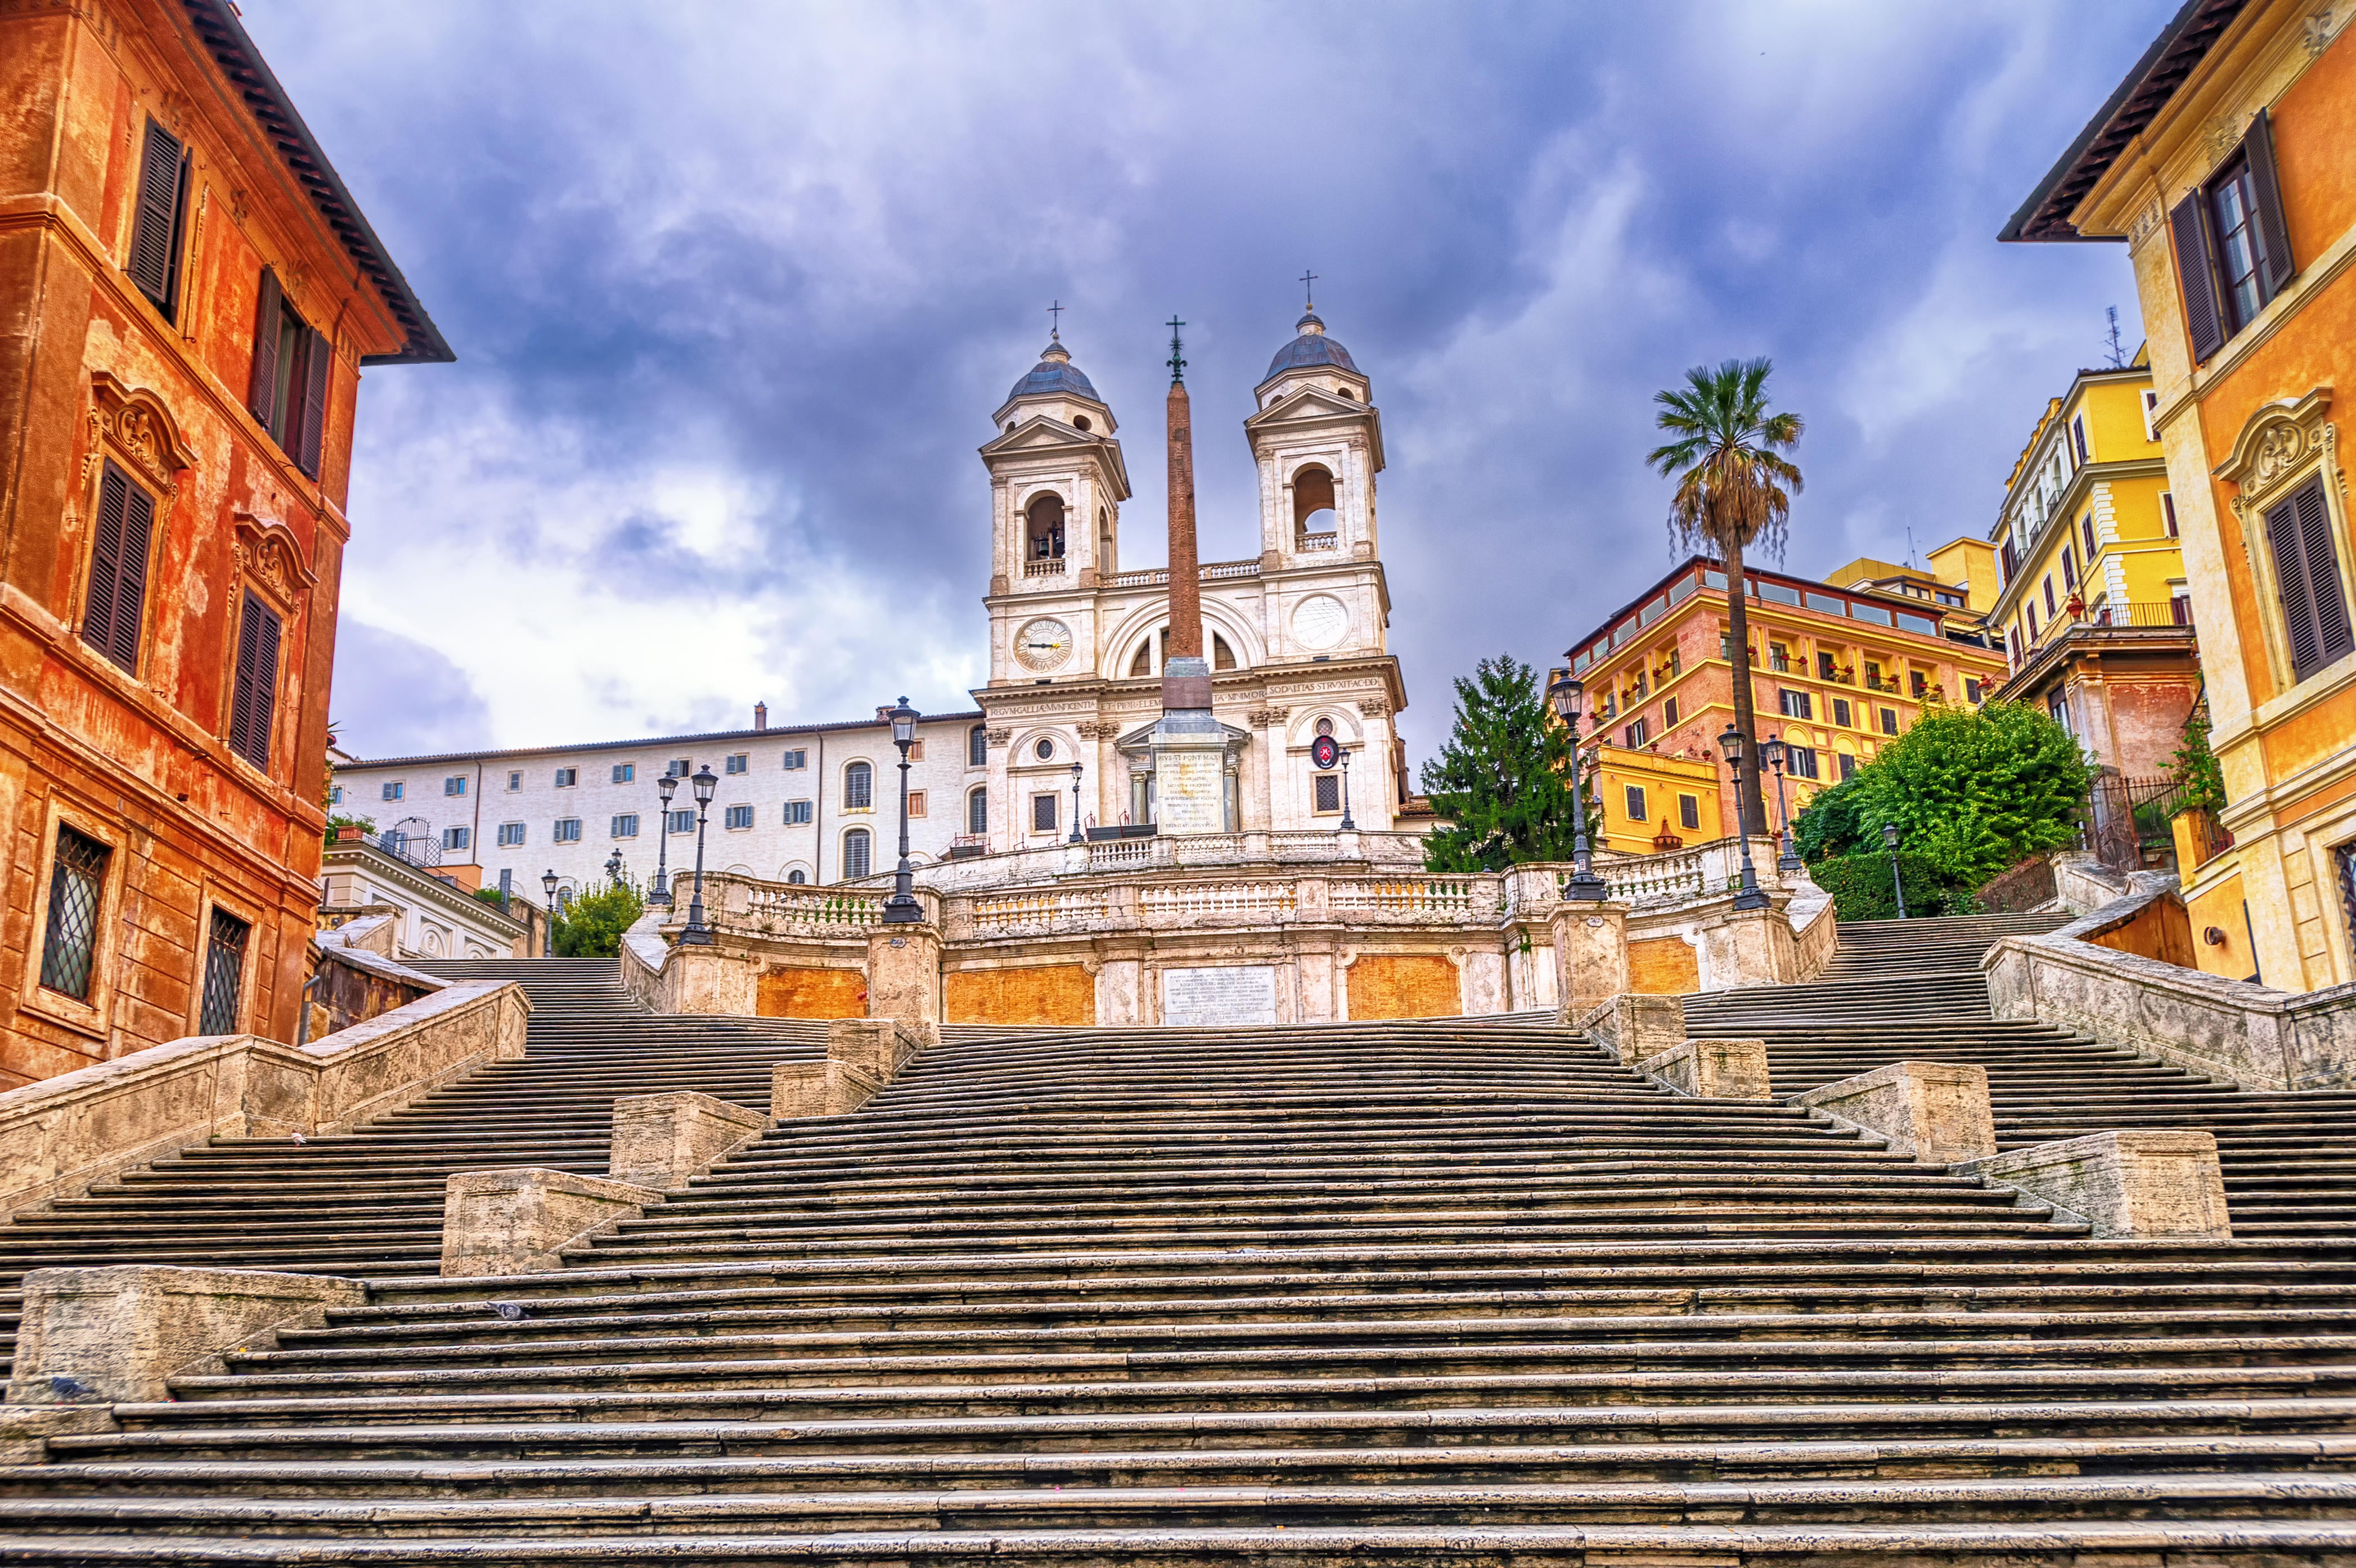 Spanish Steps and Trinita dei Monti church, a famous tourist destination in Rome, Italy